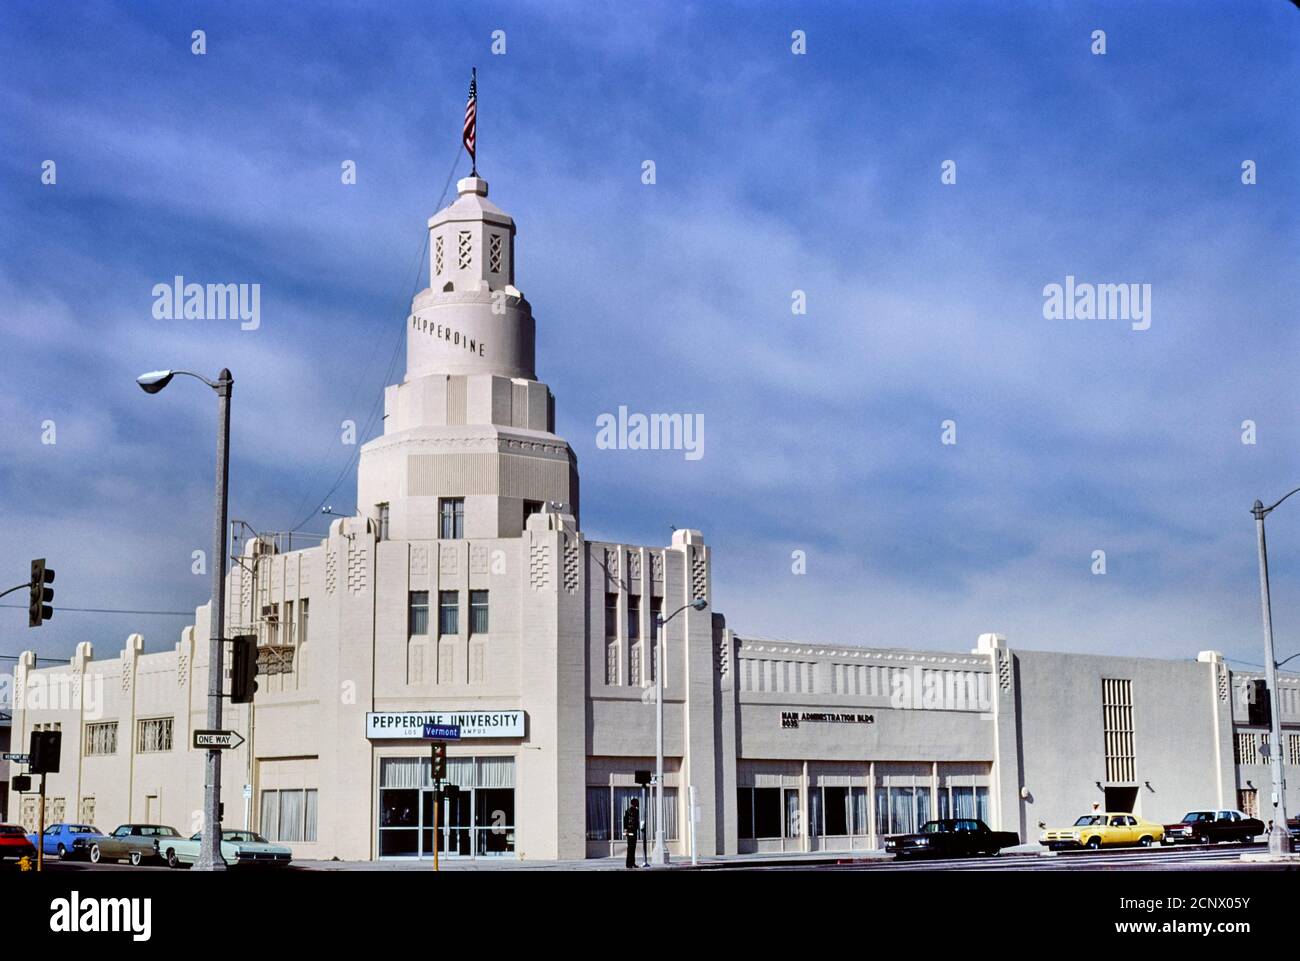 Pepperdine University, Los Angeles Campus, 81st & Vermont, Los Angeles, Kalifornien, USA, John Margolies Roadside America Photograph Archive, 1977 Stockfoto